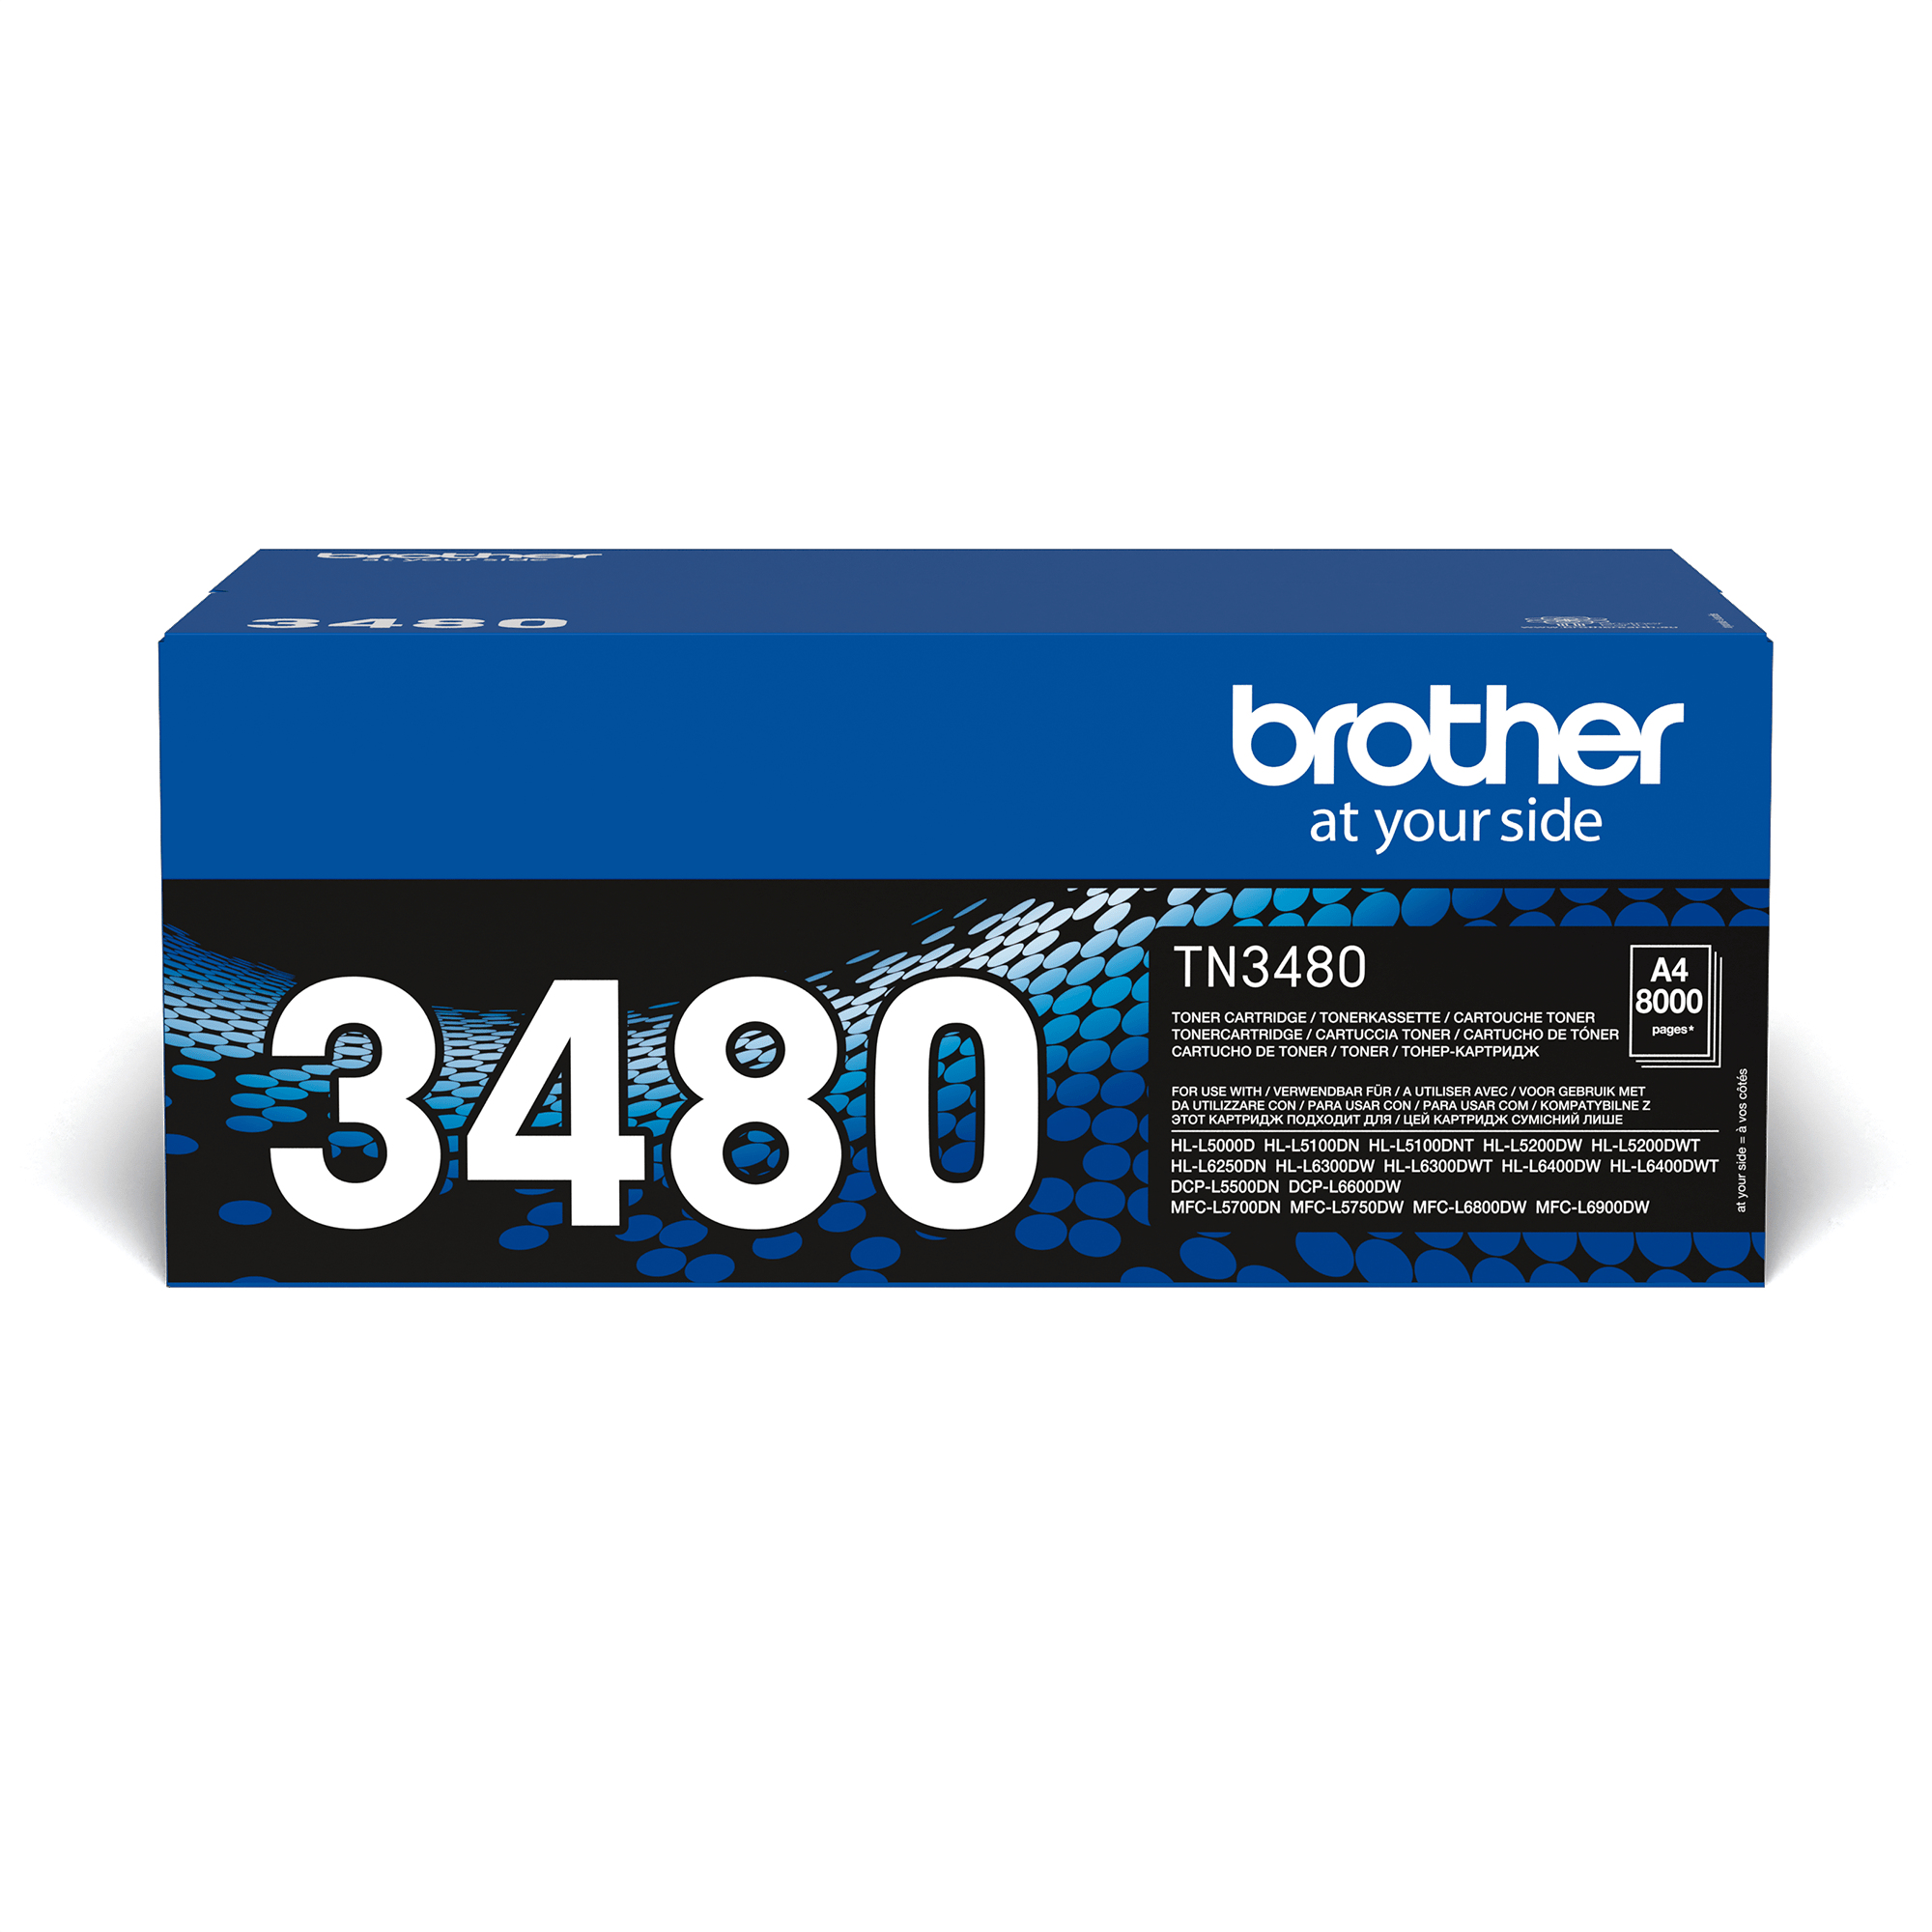 Brother tn3480 toner